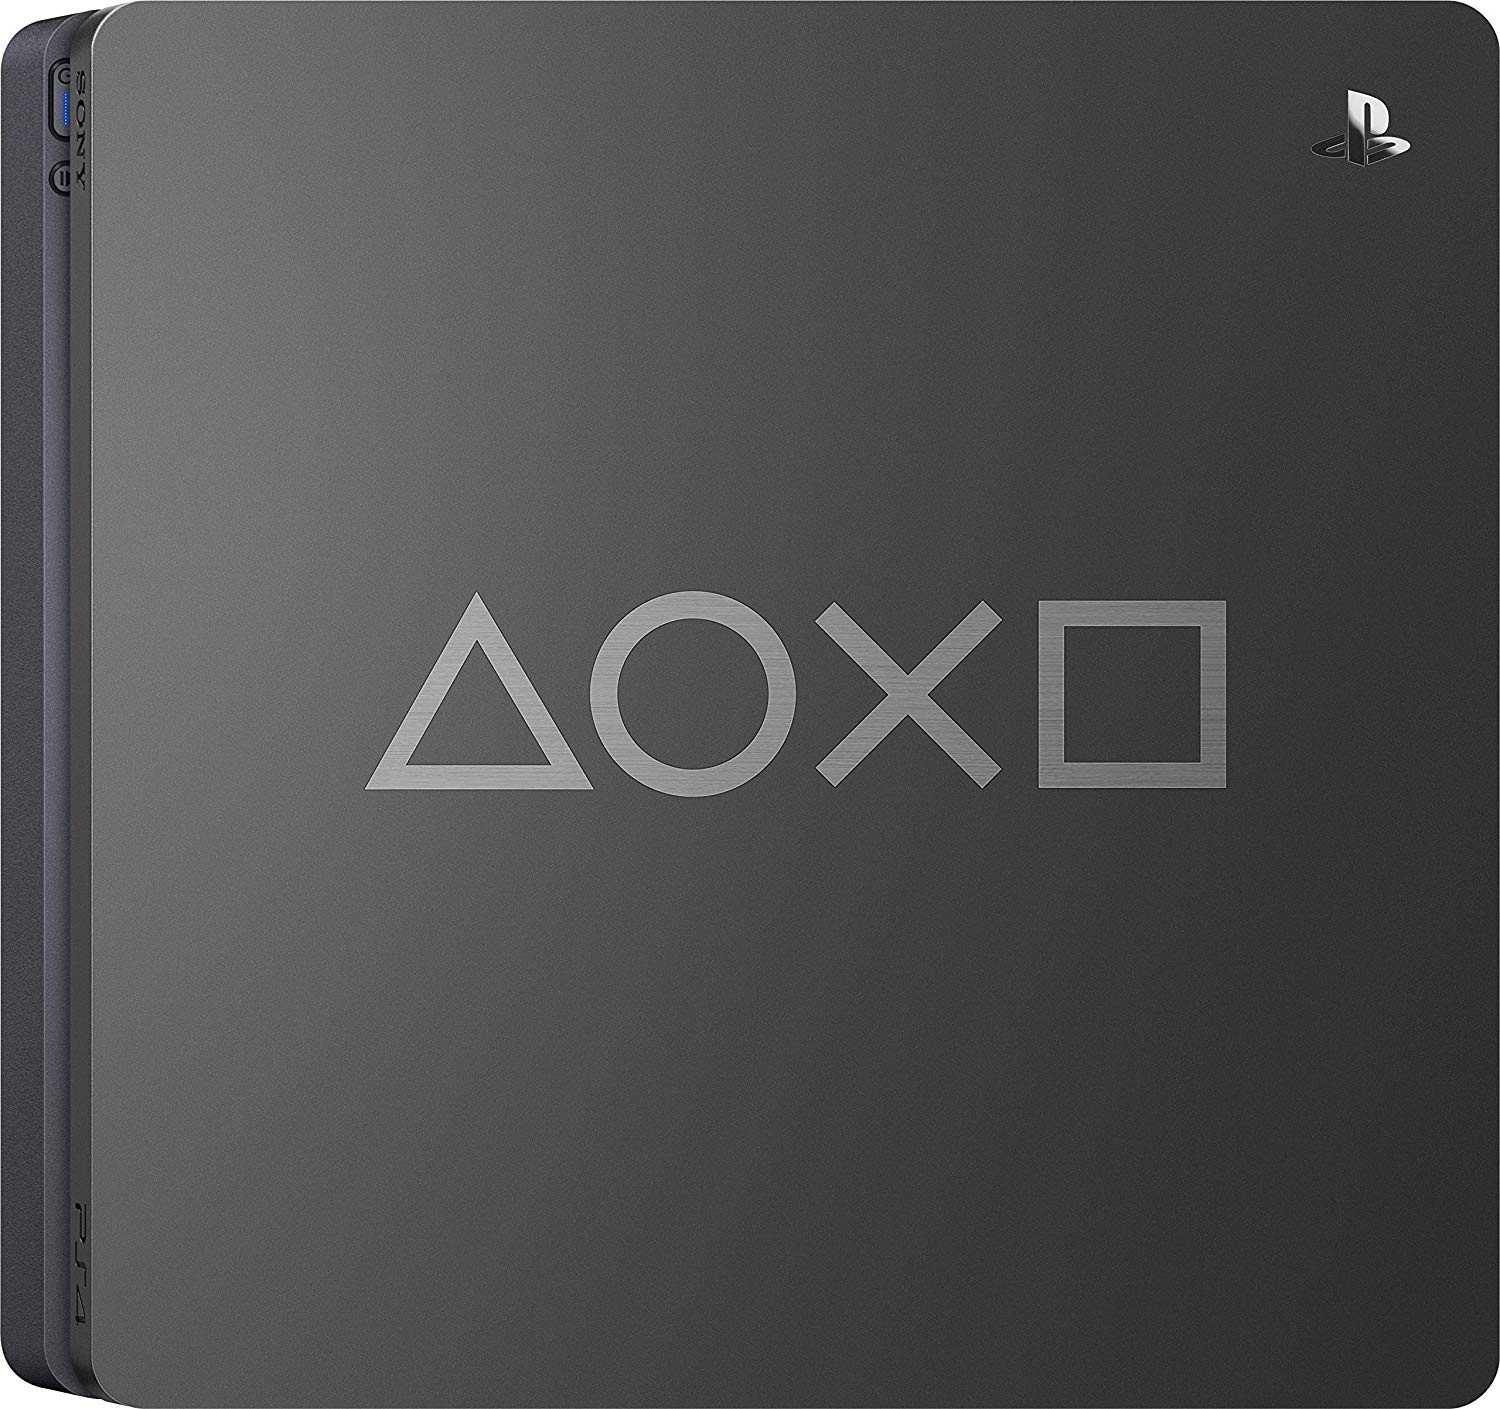 PlayStation 4 Slim 1TB Days of Play Limited Edition 